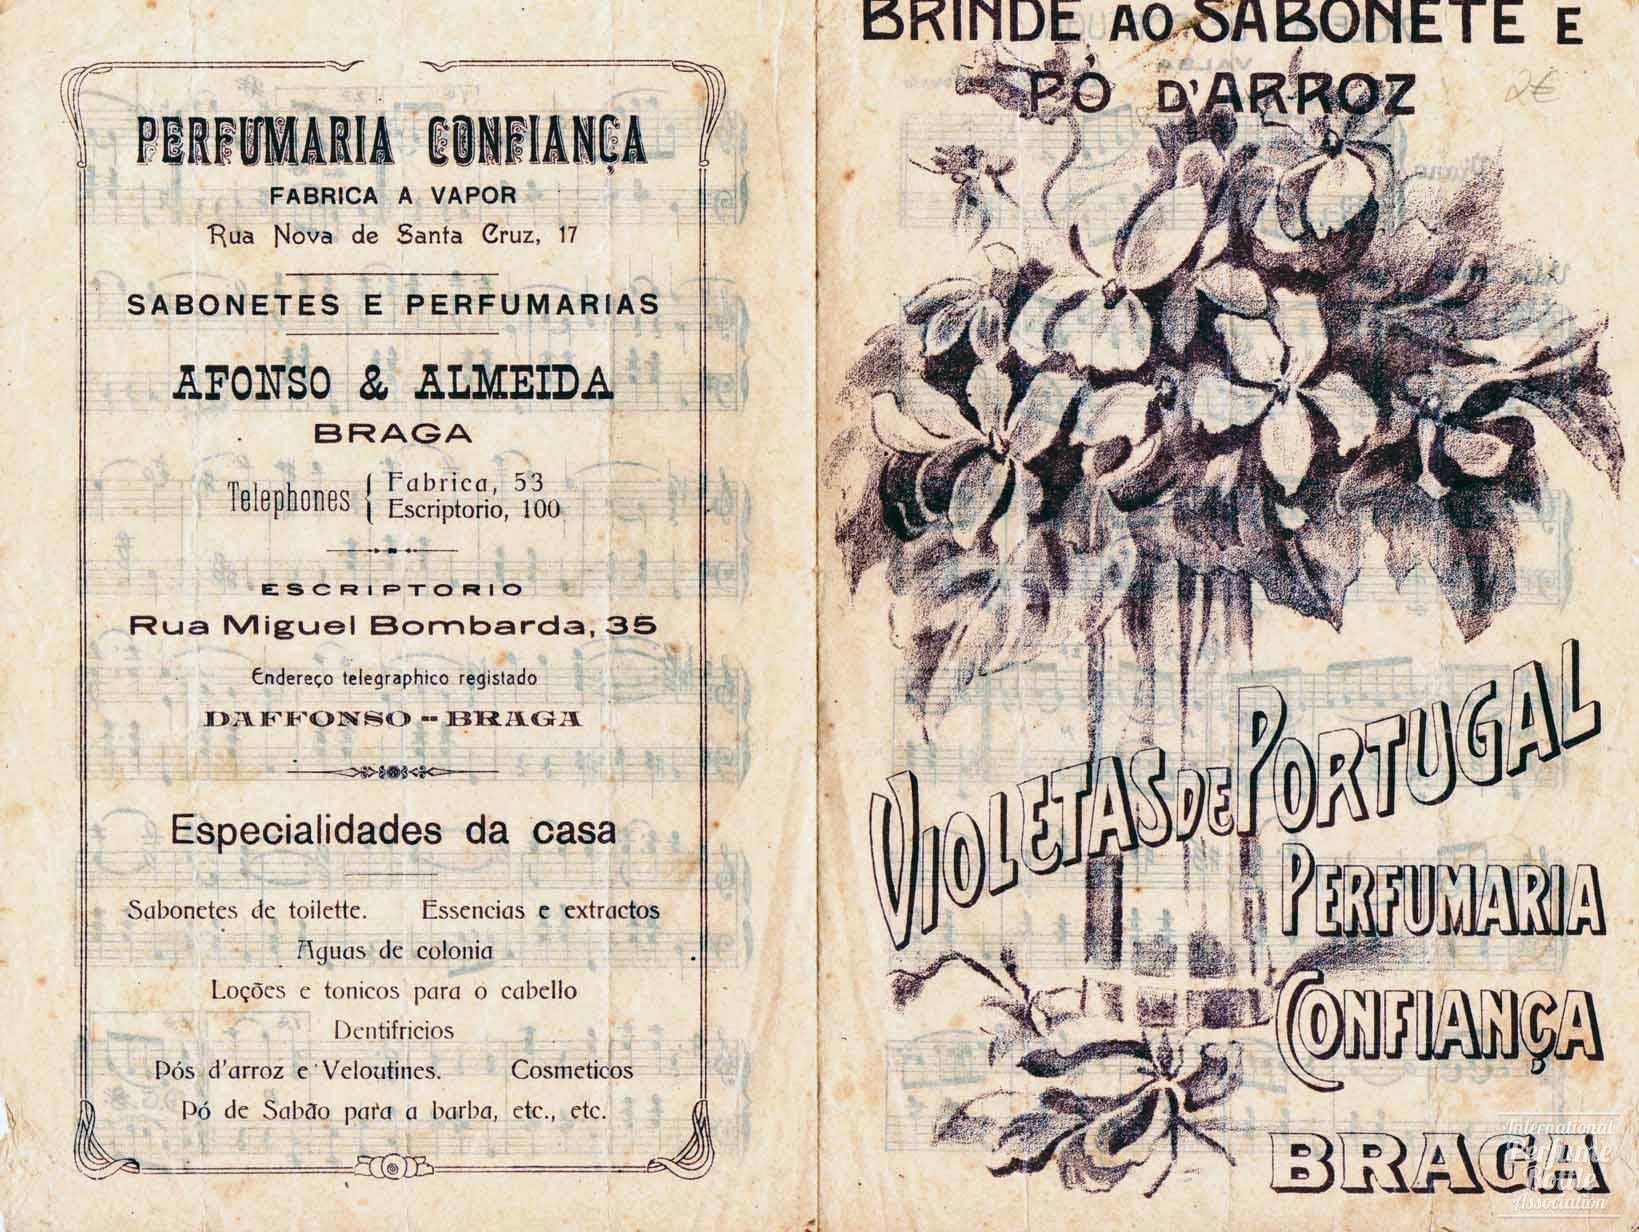 Promotional Music Issued by Confiança de Braga